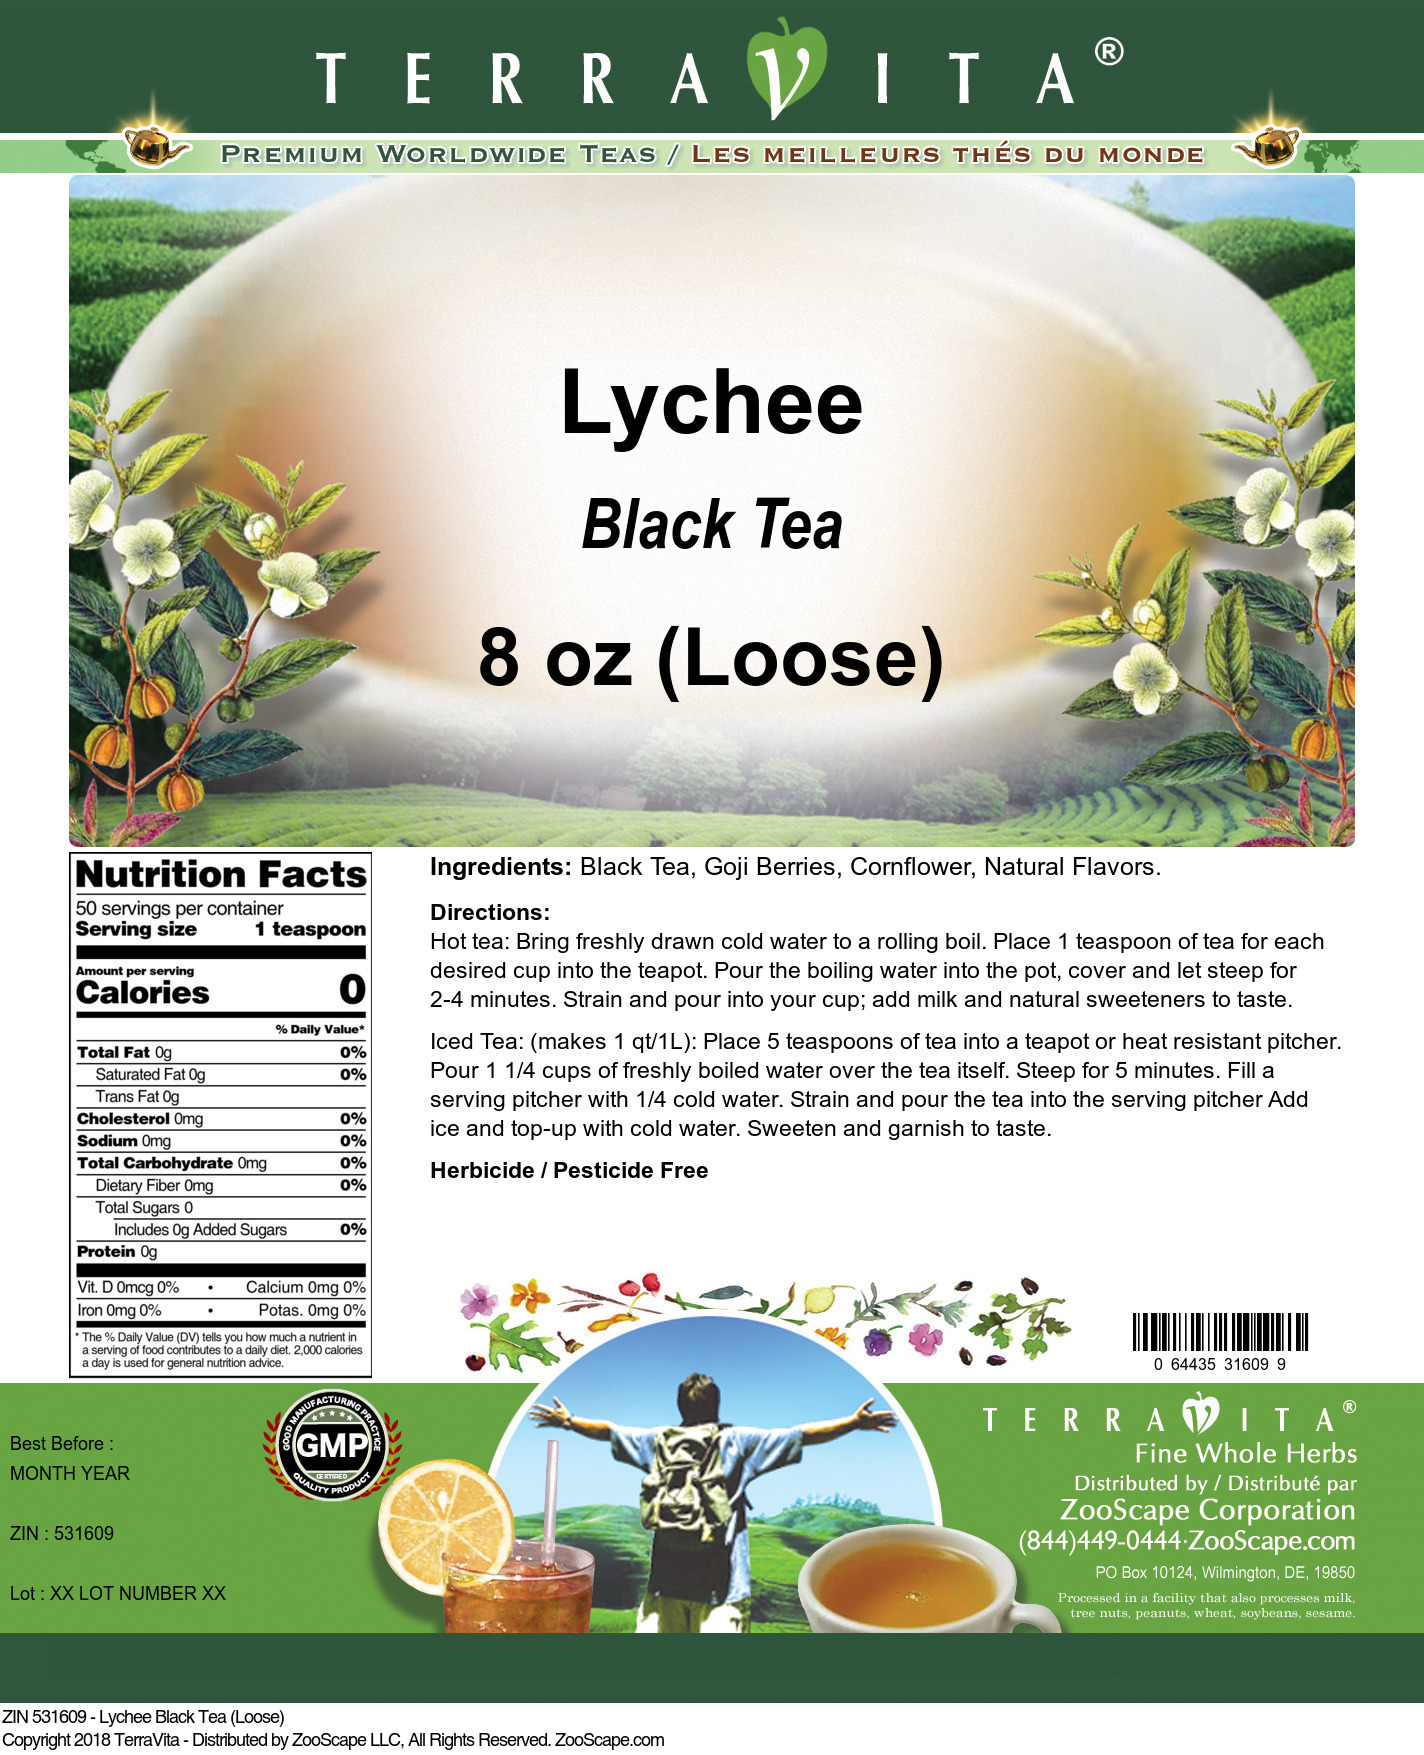 Lychee Black Tea (Loose) - Label